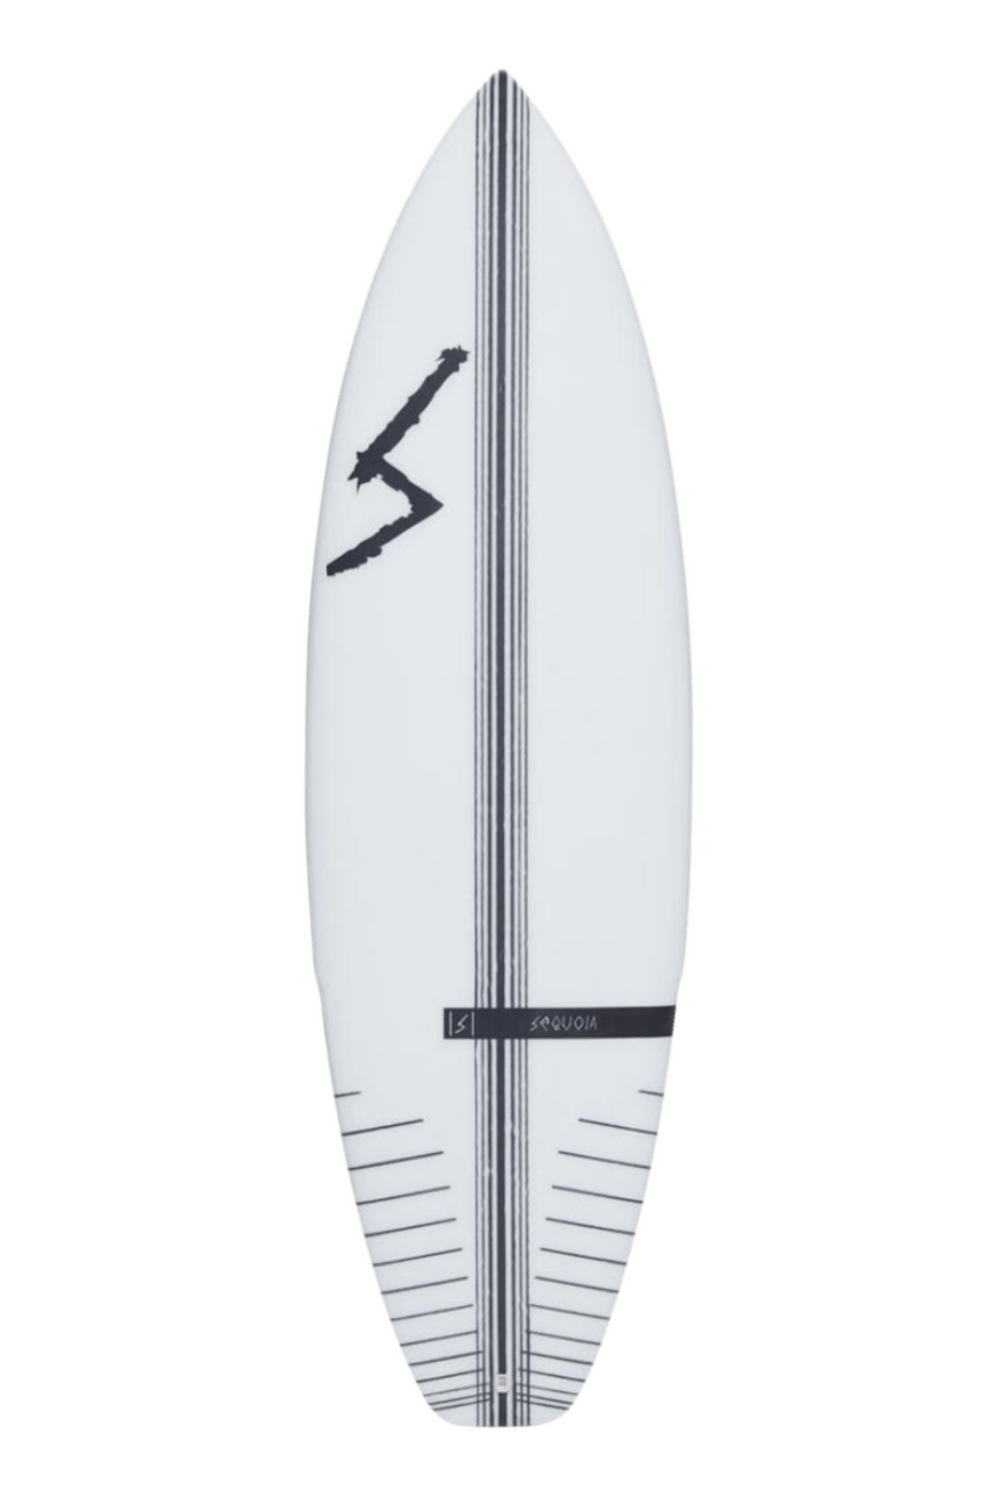 Toro white surfboard